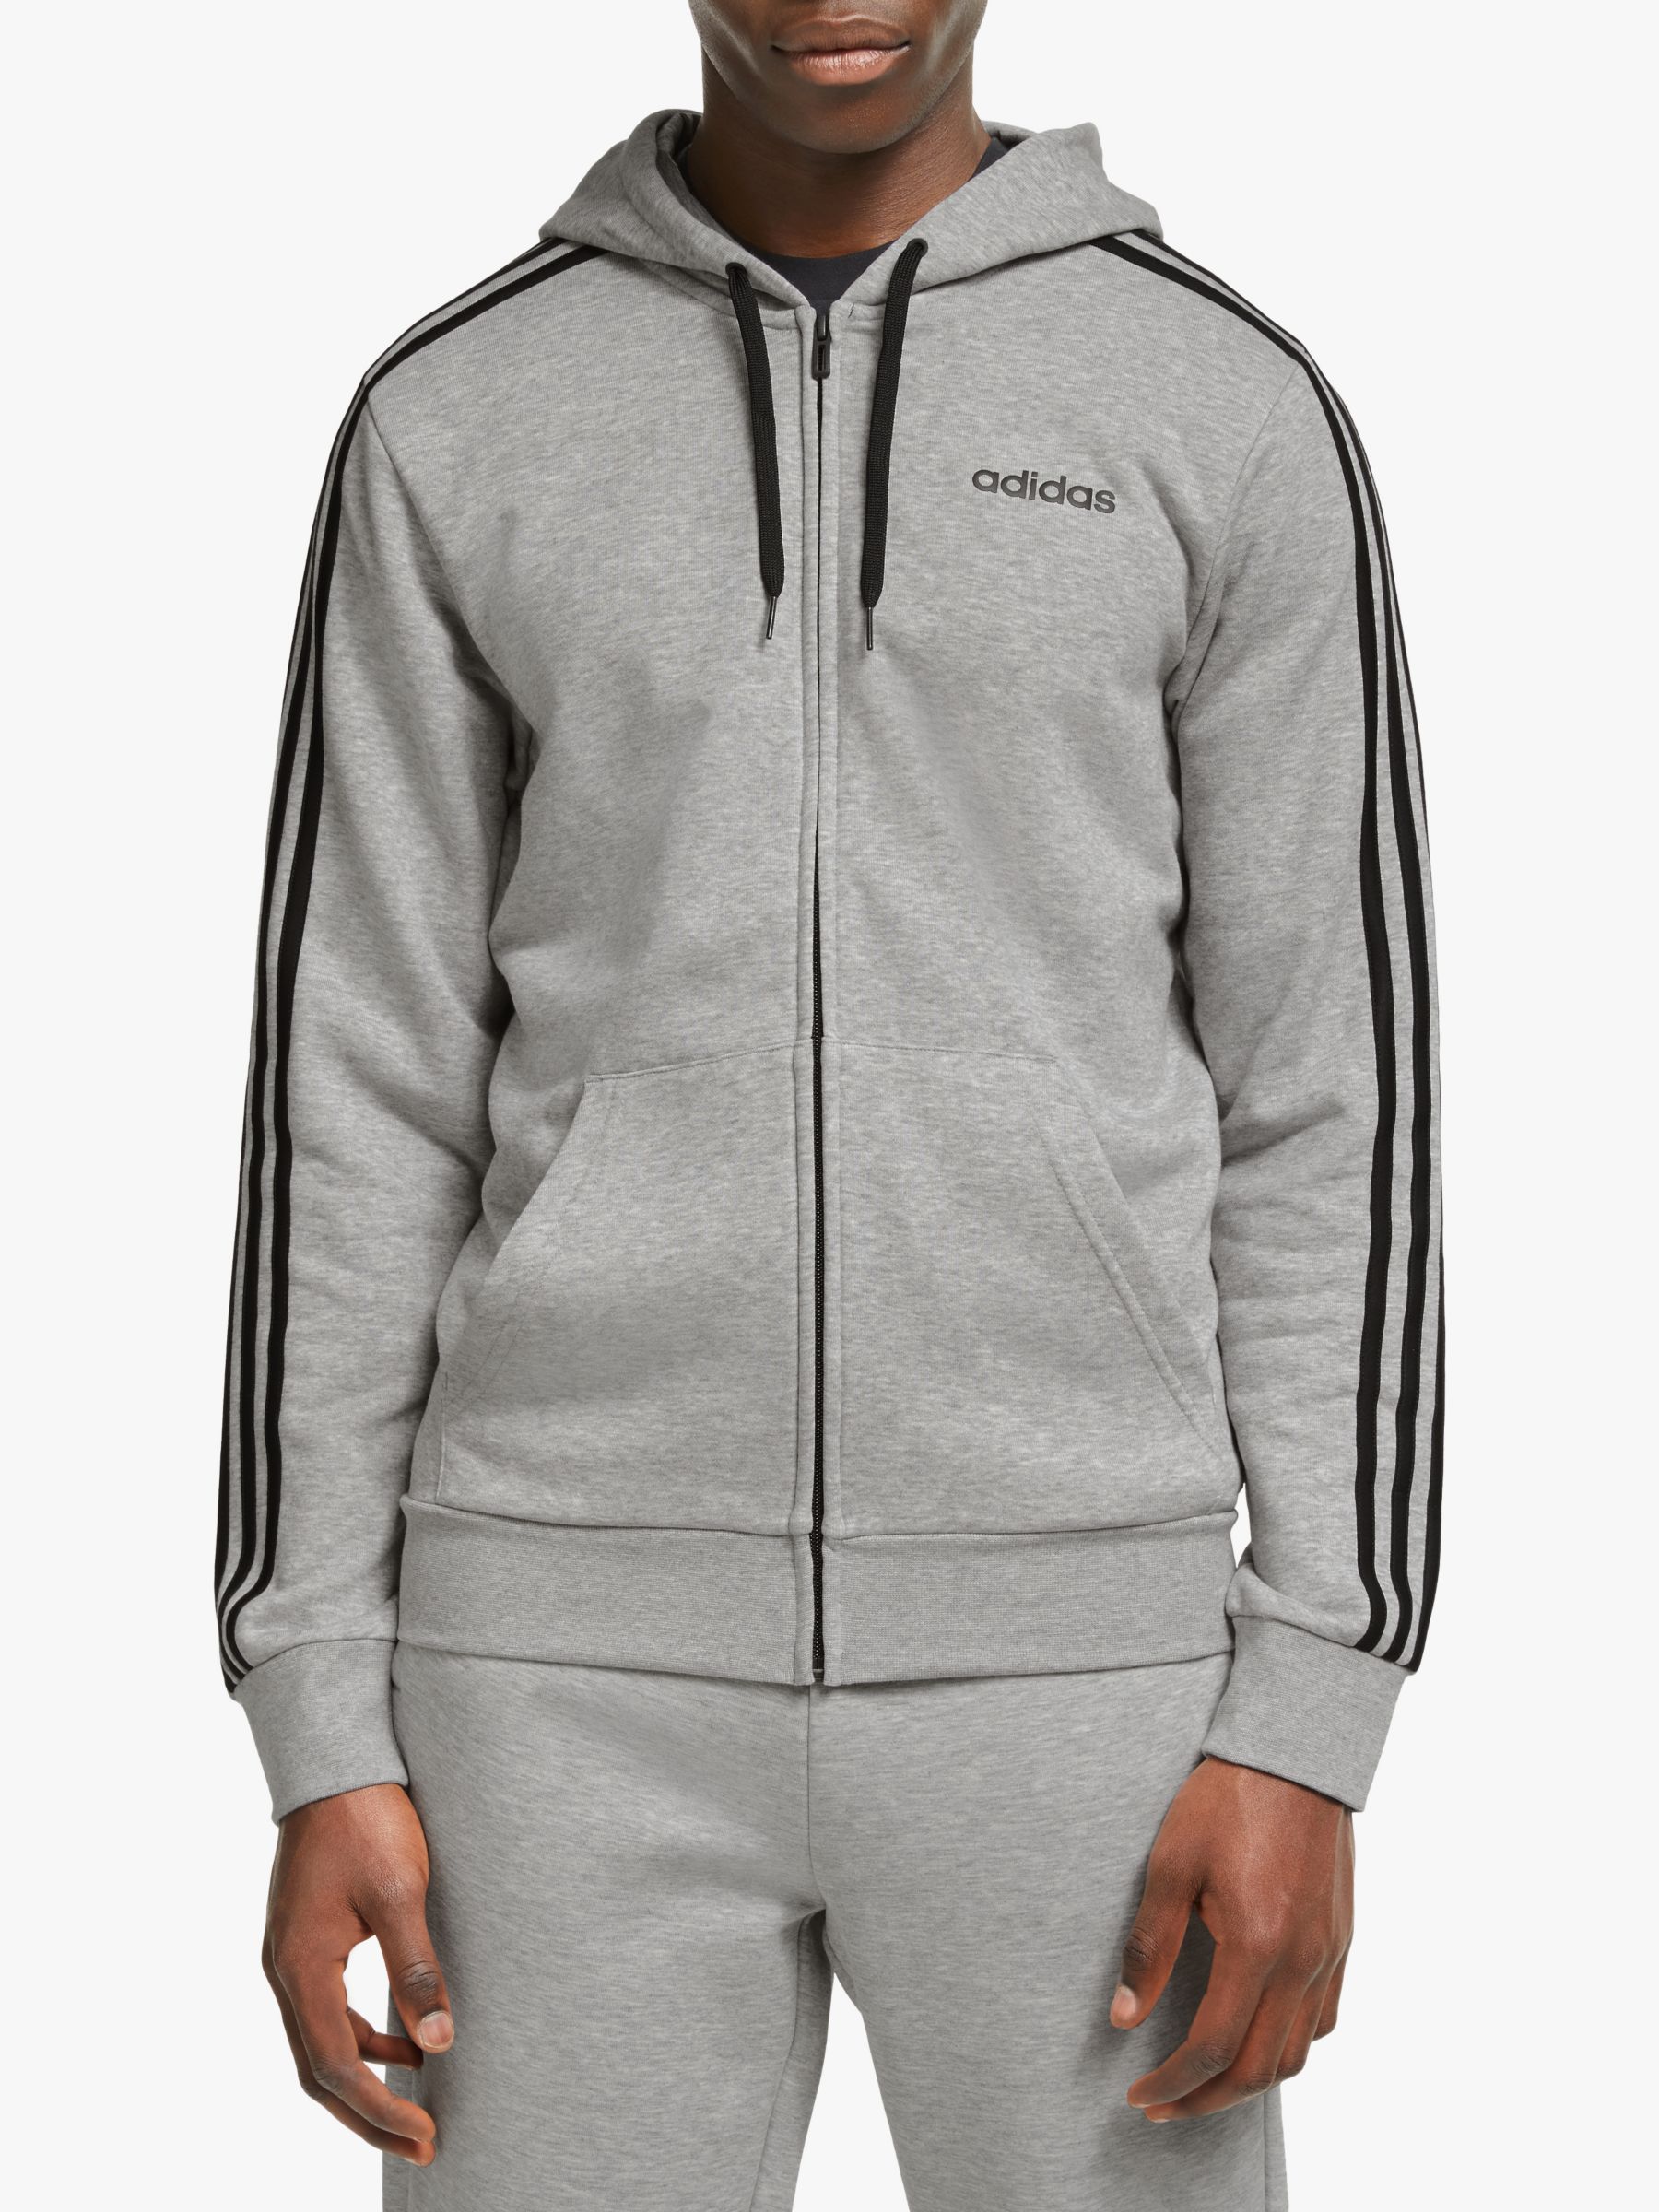 adidas grey zip up jacket